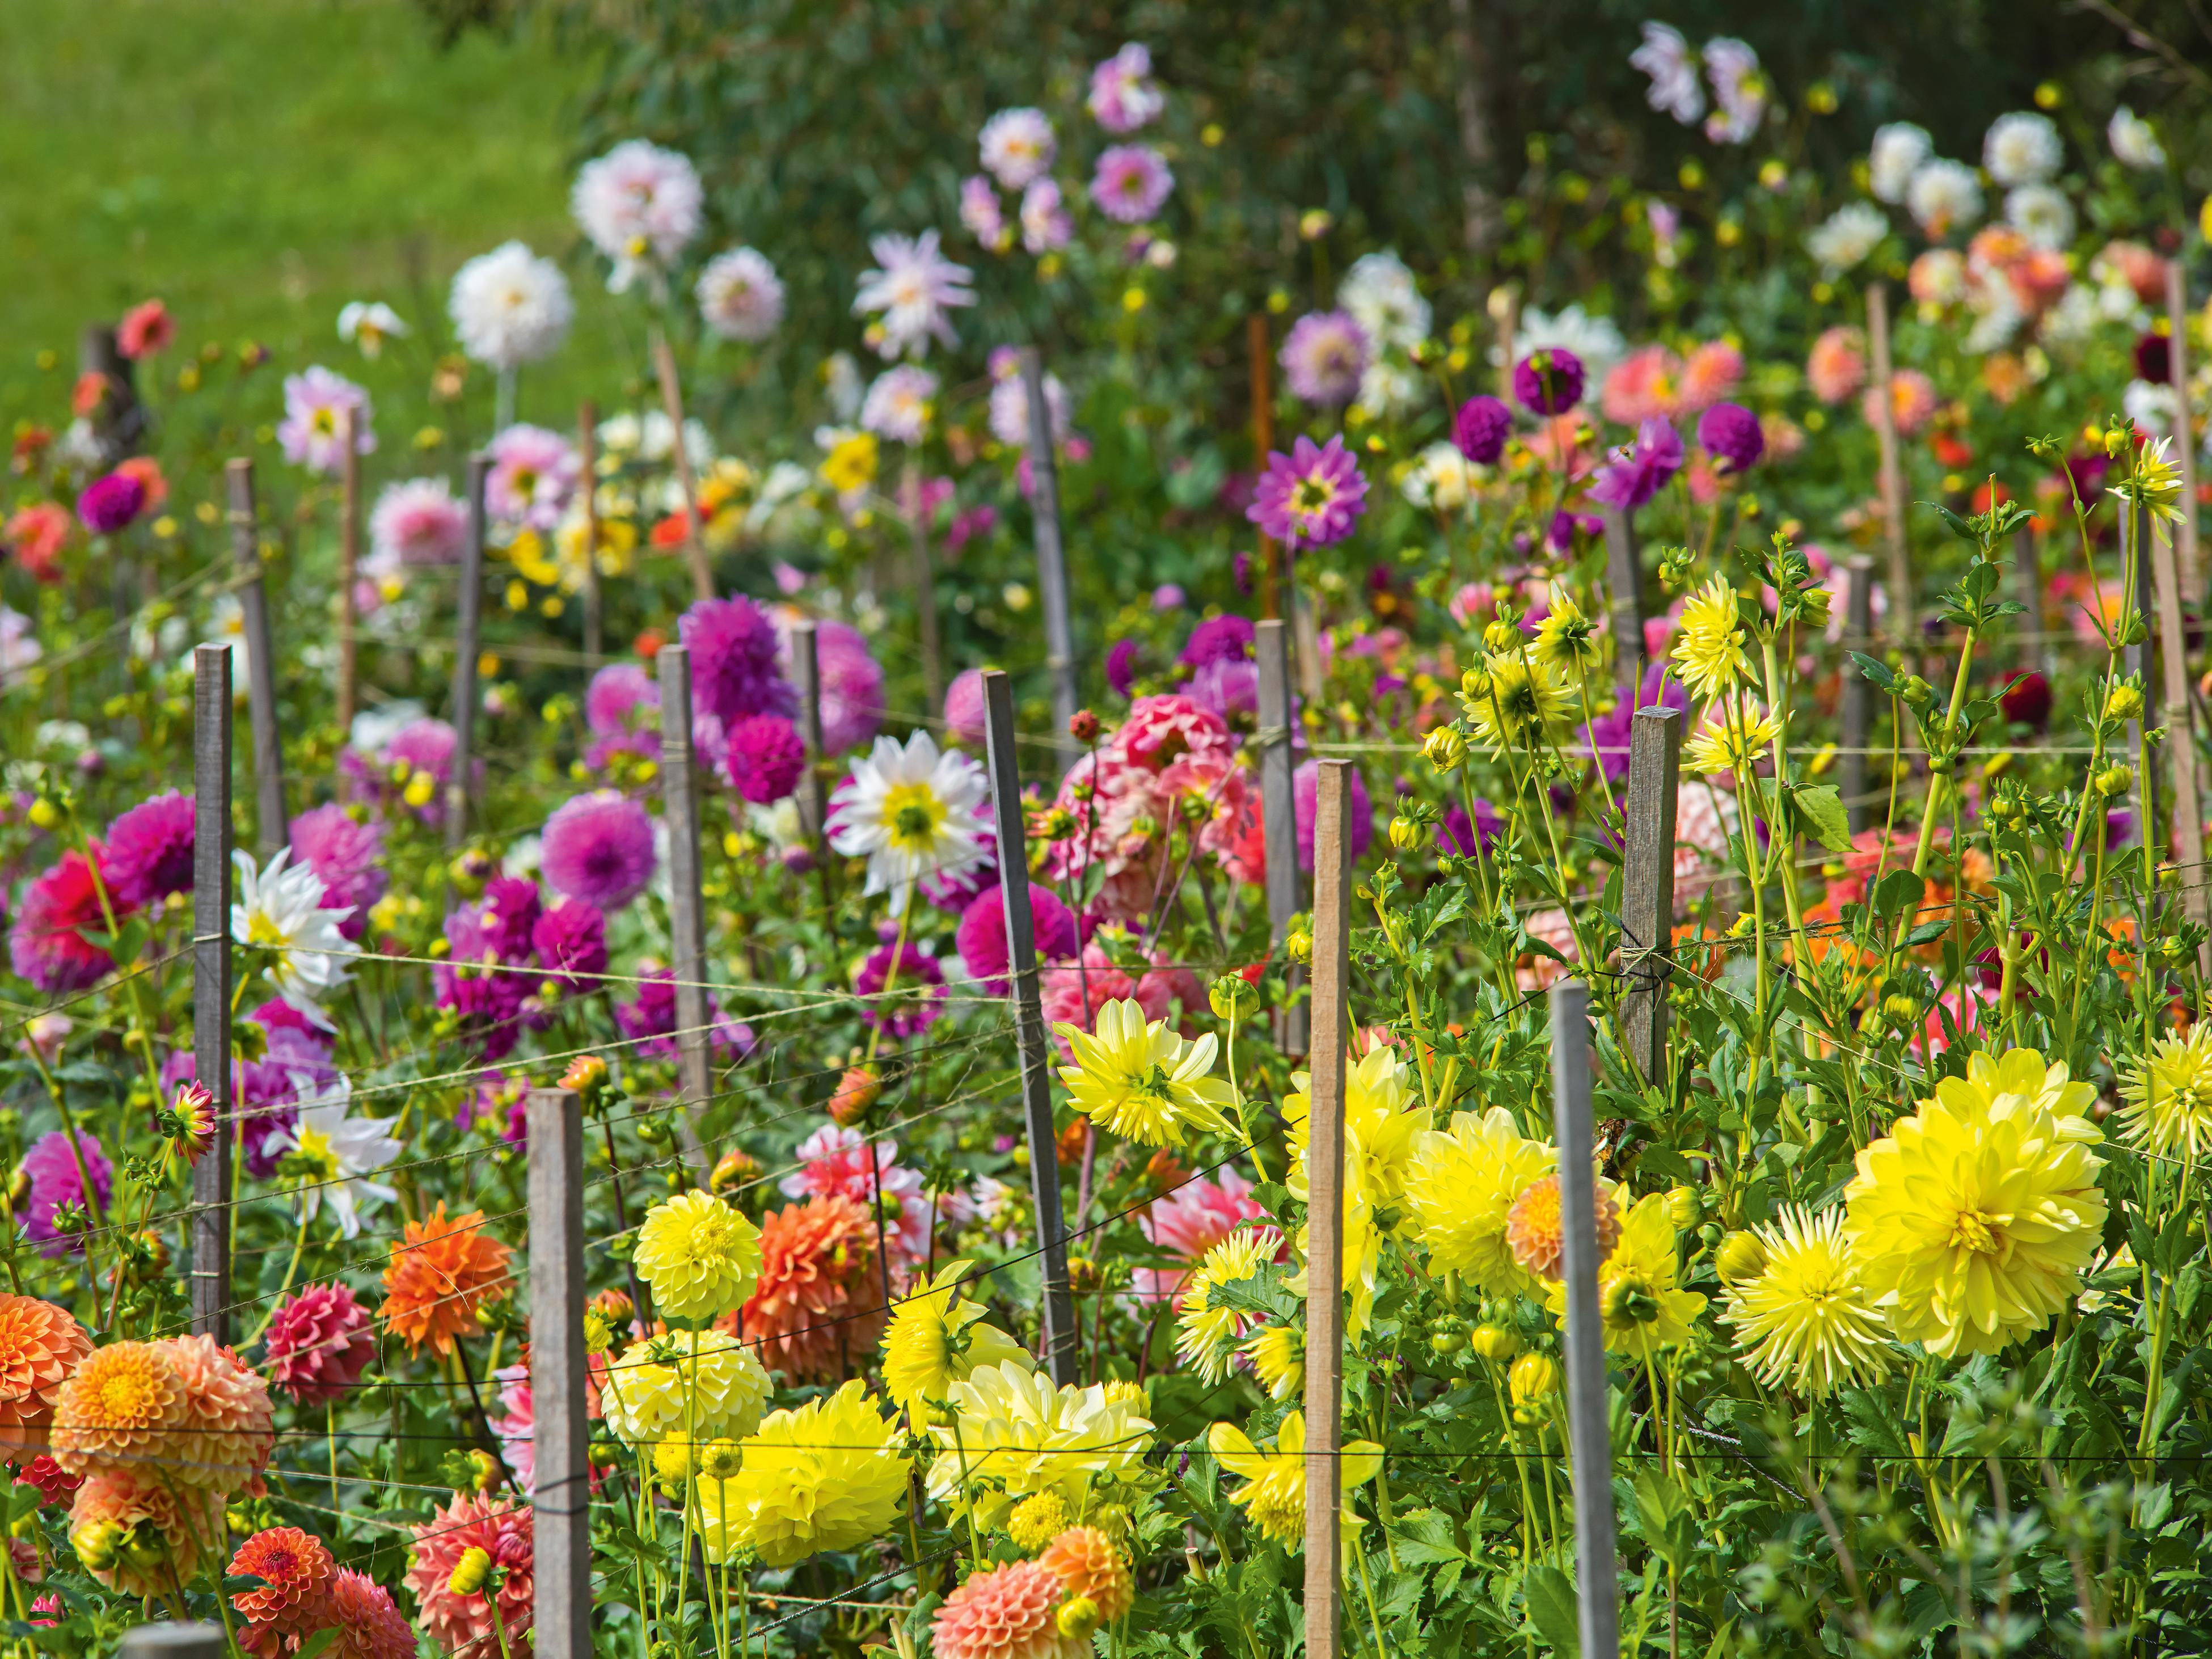 How To Start A Flower Garden: 13 Essential Steps - Bunnings Australia